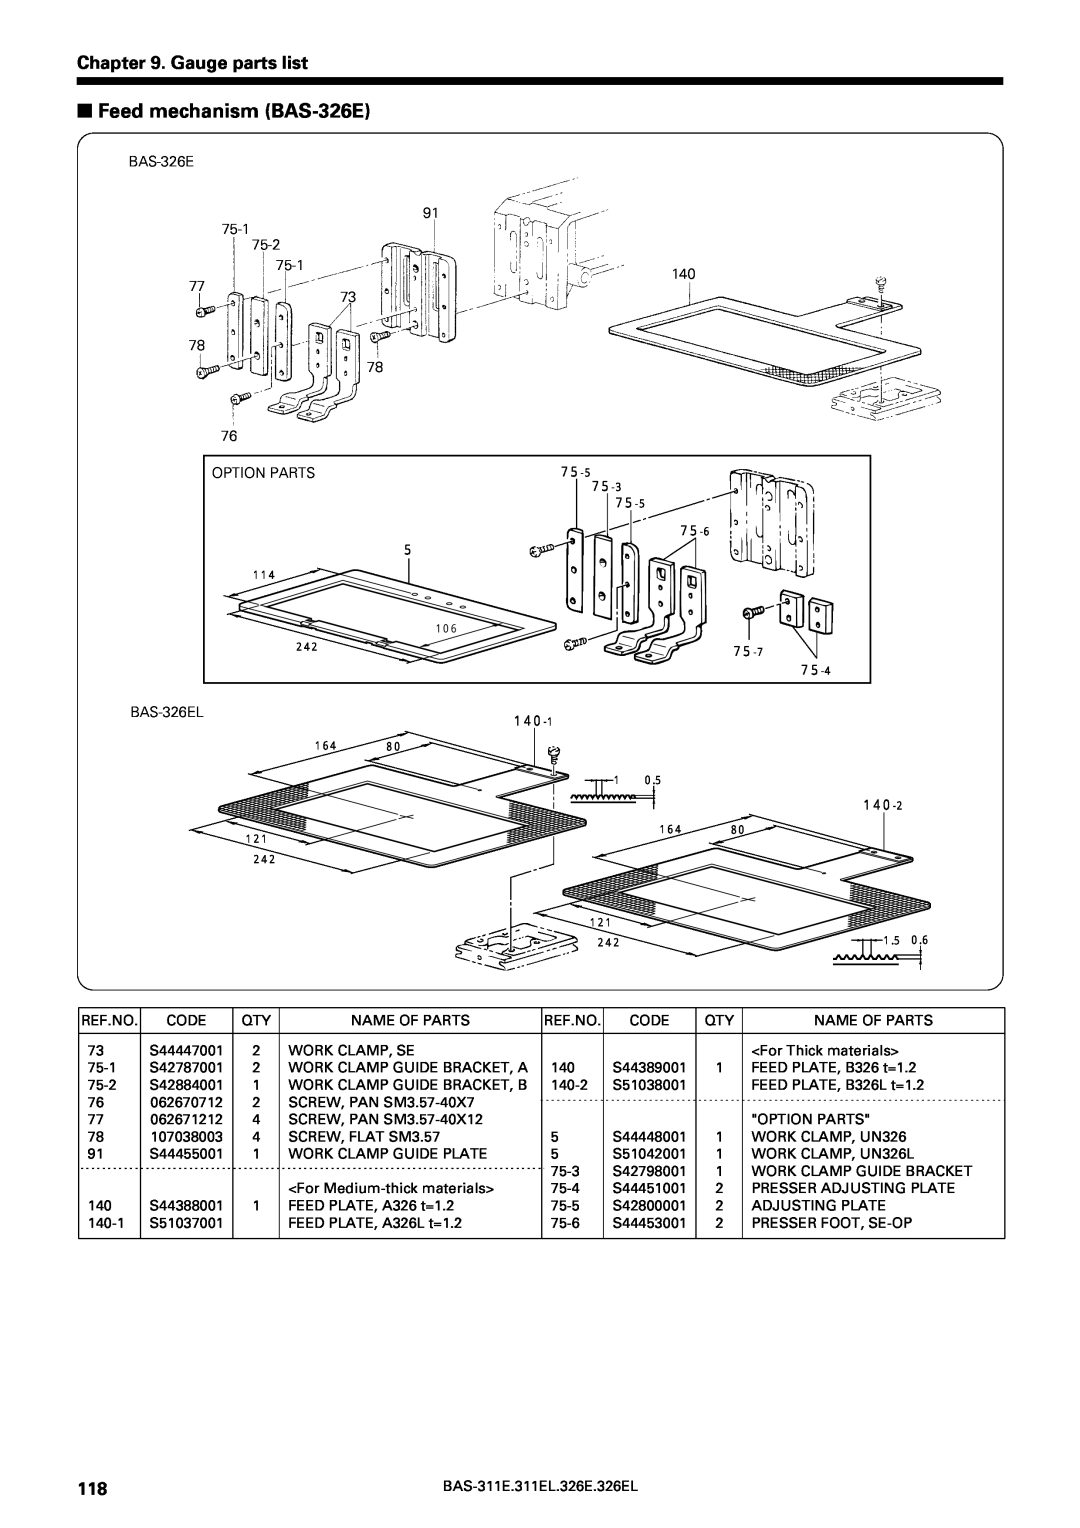 Brother BAS-311E service manual Feed mechanism BAS-326E, Gauge parts list 